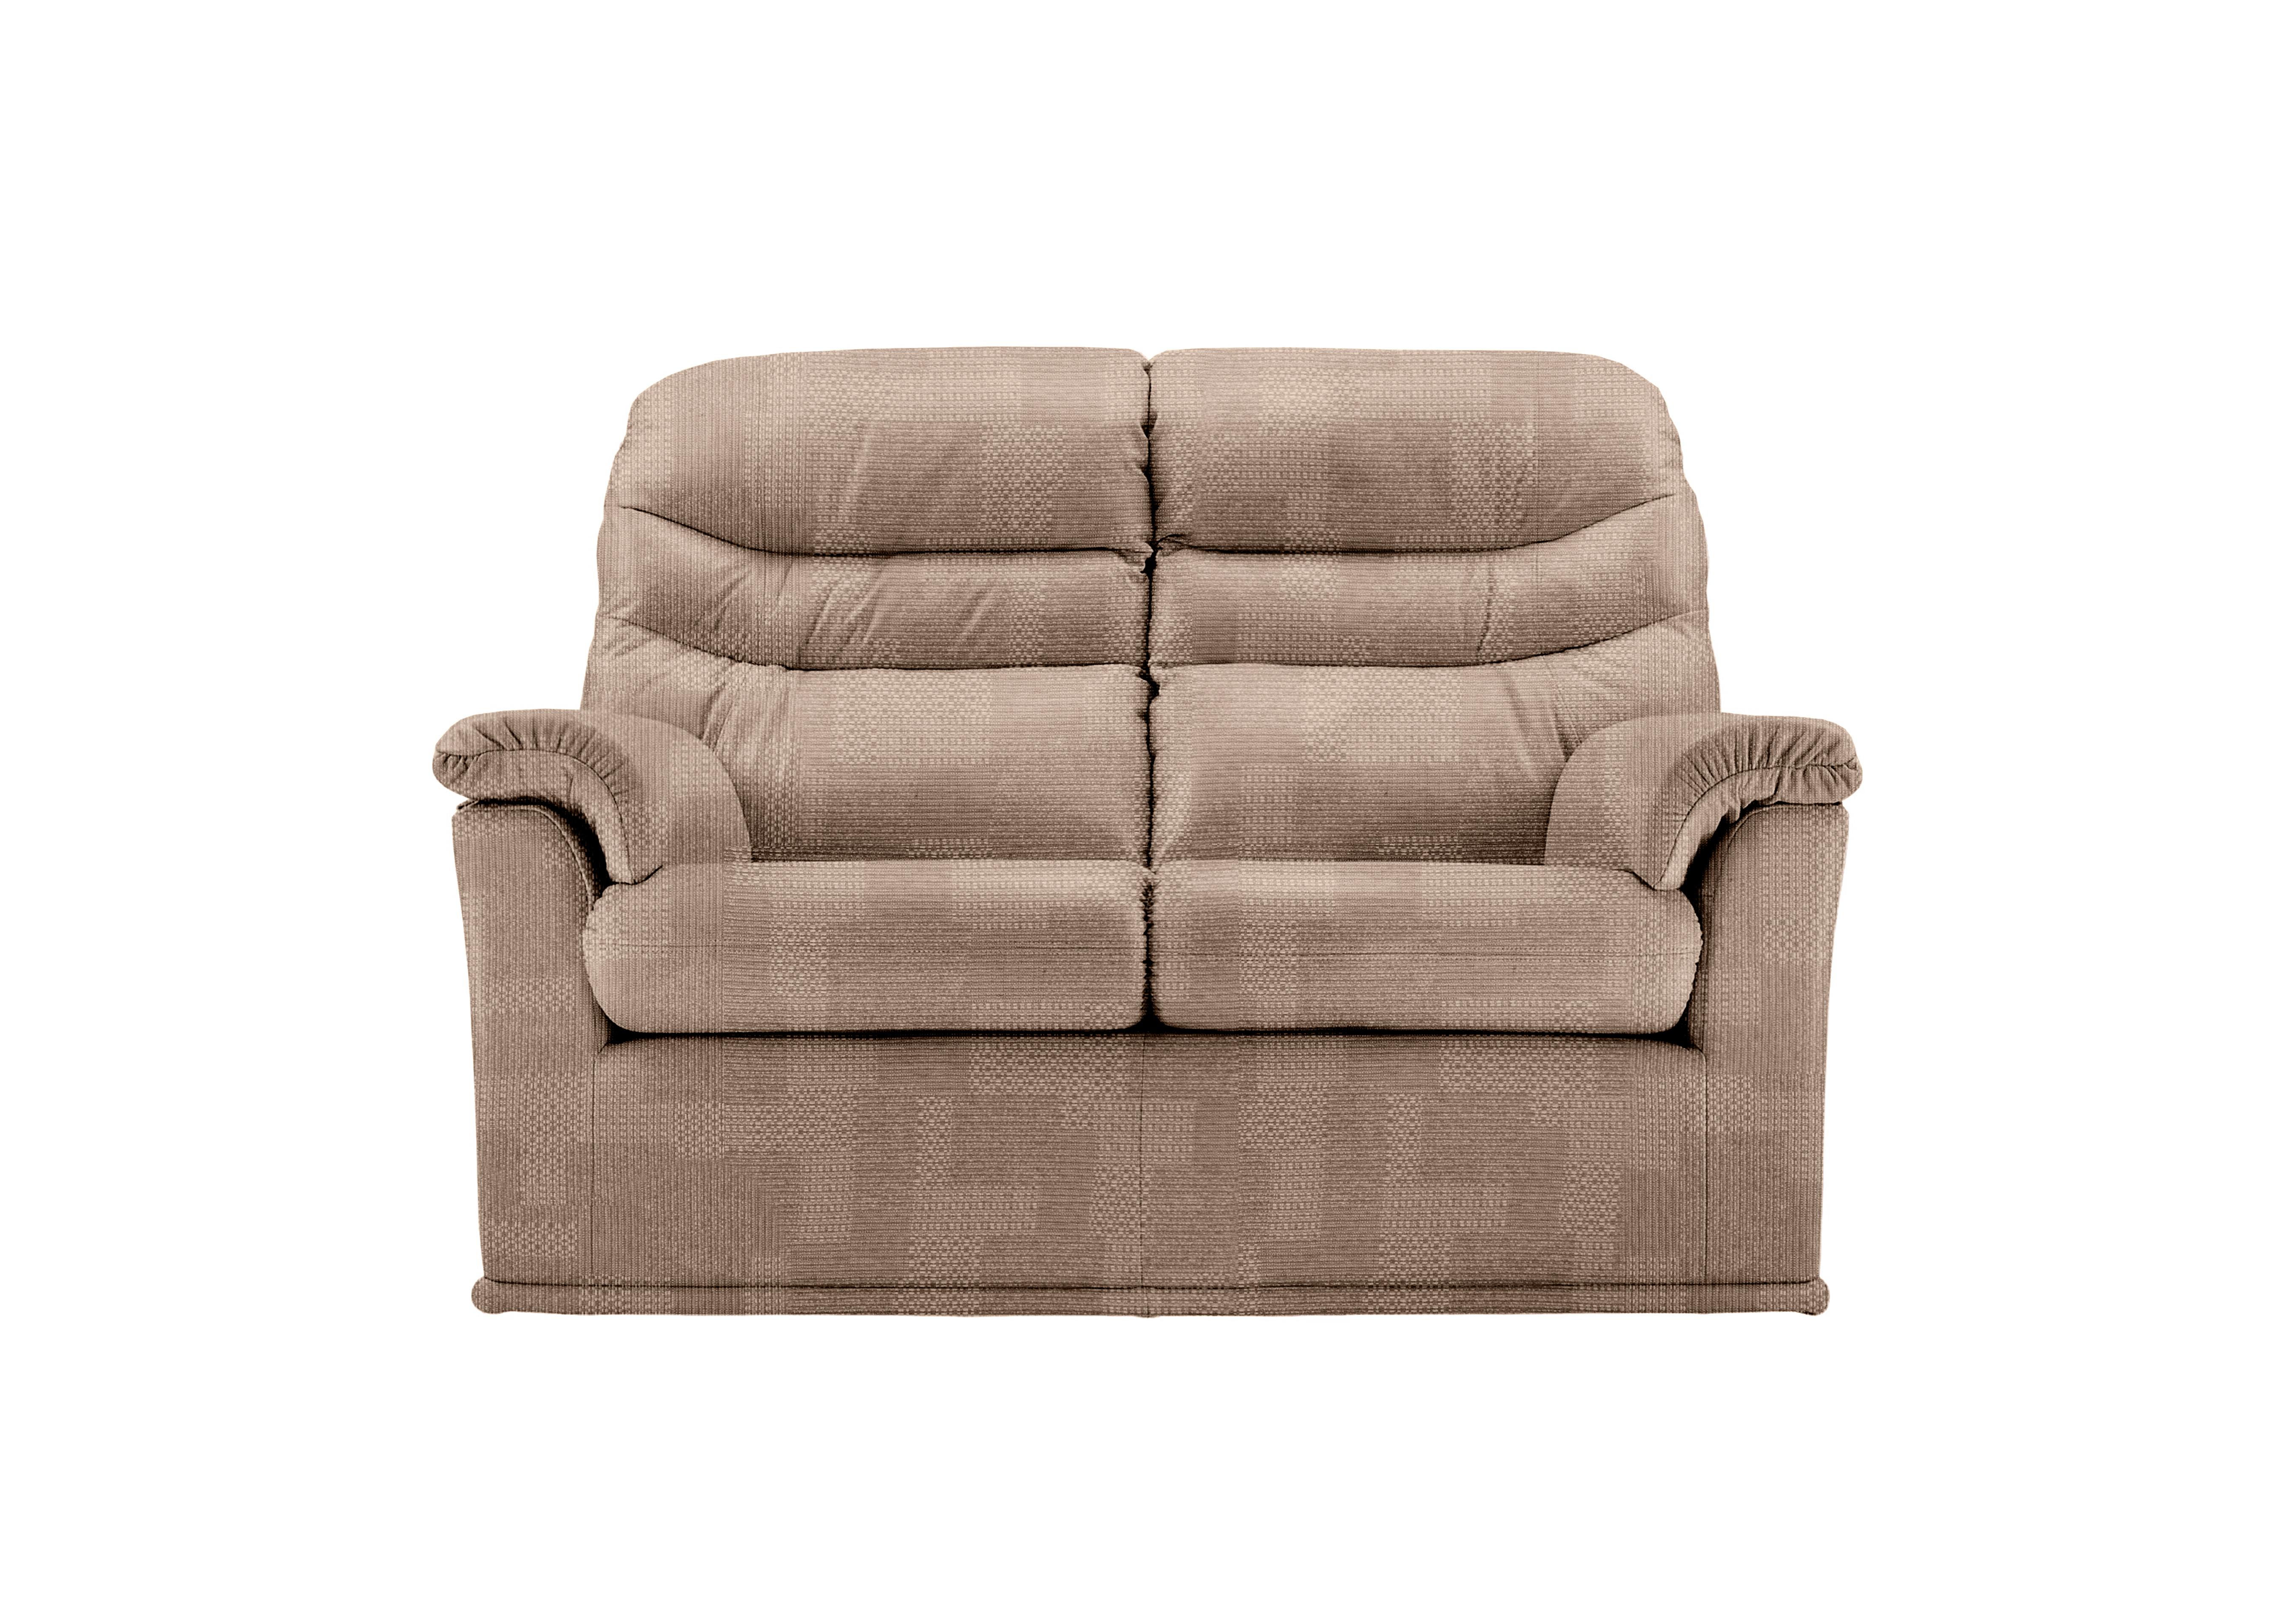 Malvern 2 Seater Fabric Sofa in A800 Faro Sand on Furniture Village